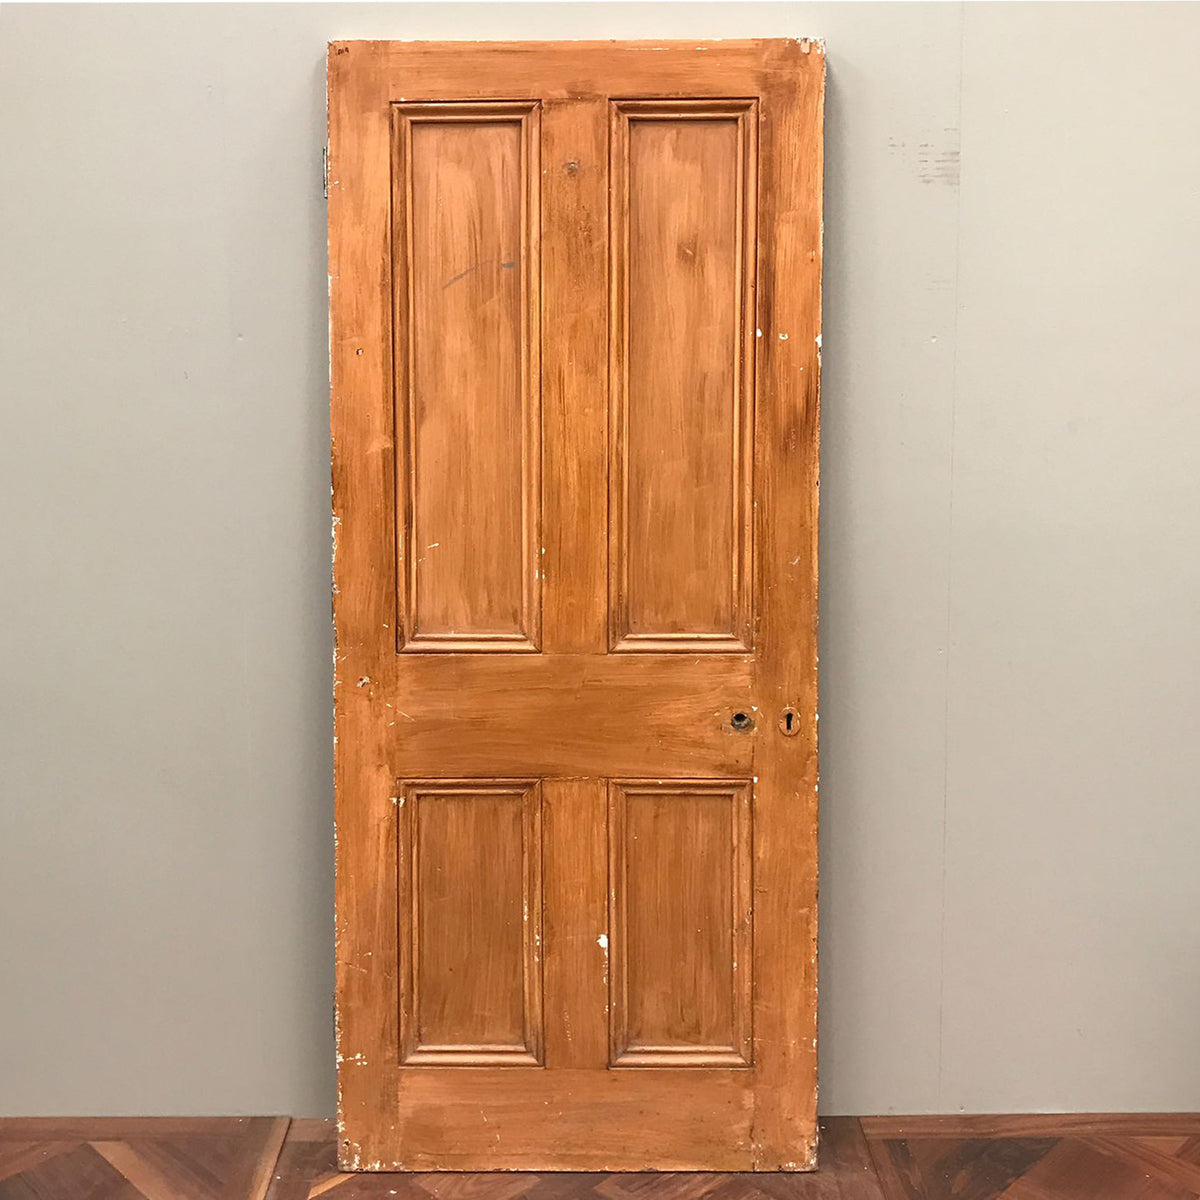 Victorian Four Panel Door - 200cm x 80.5cm x 5cm | The Architectural Forum